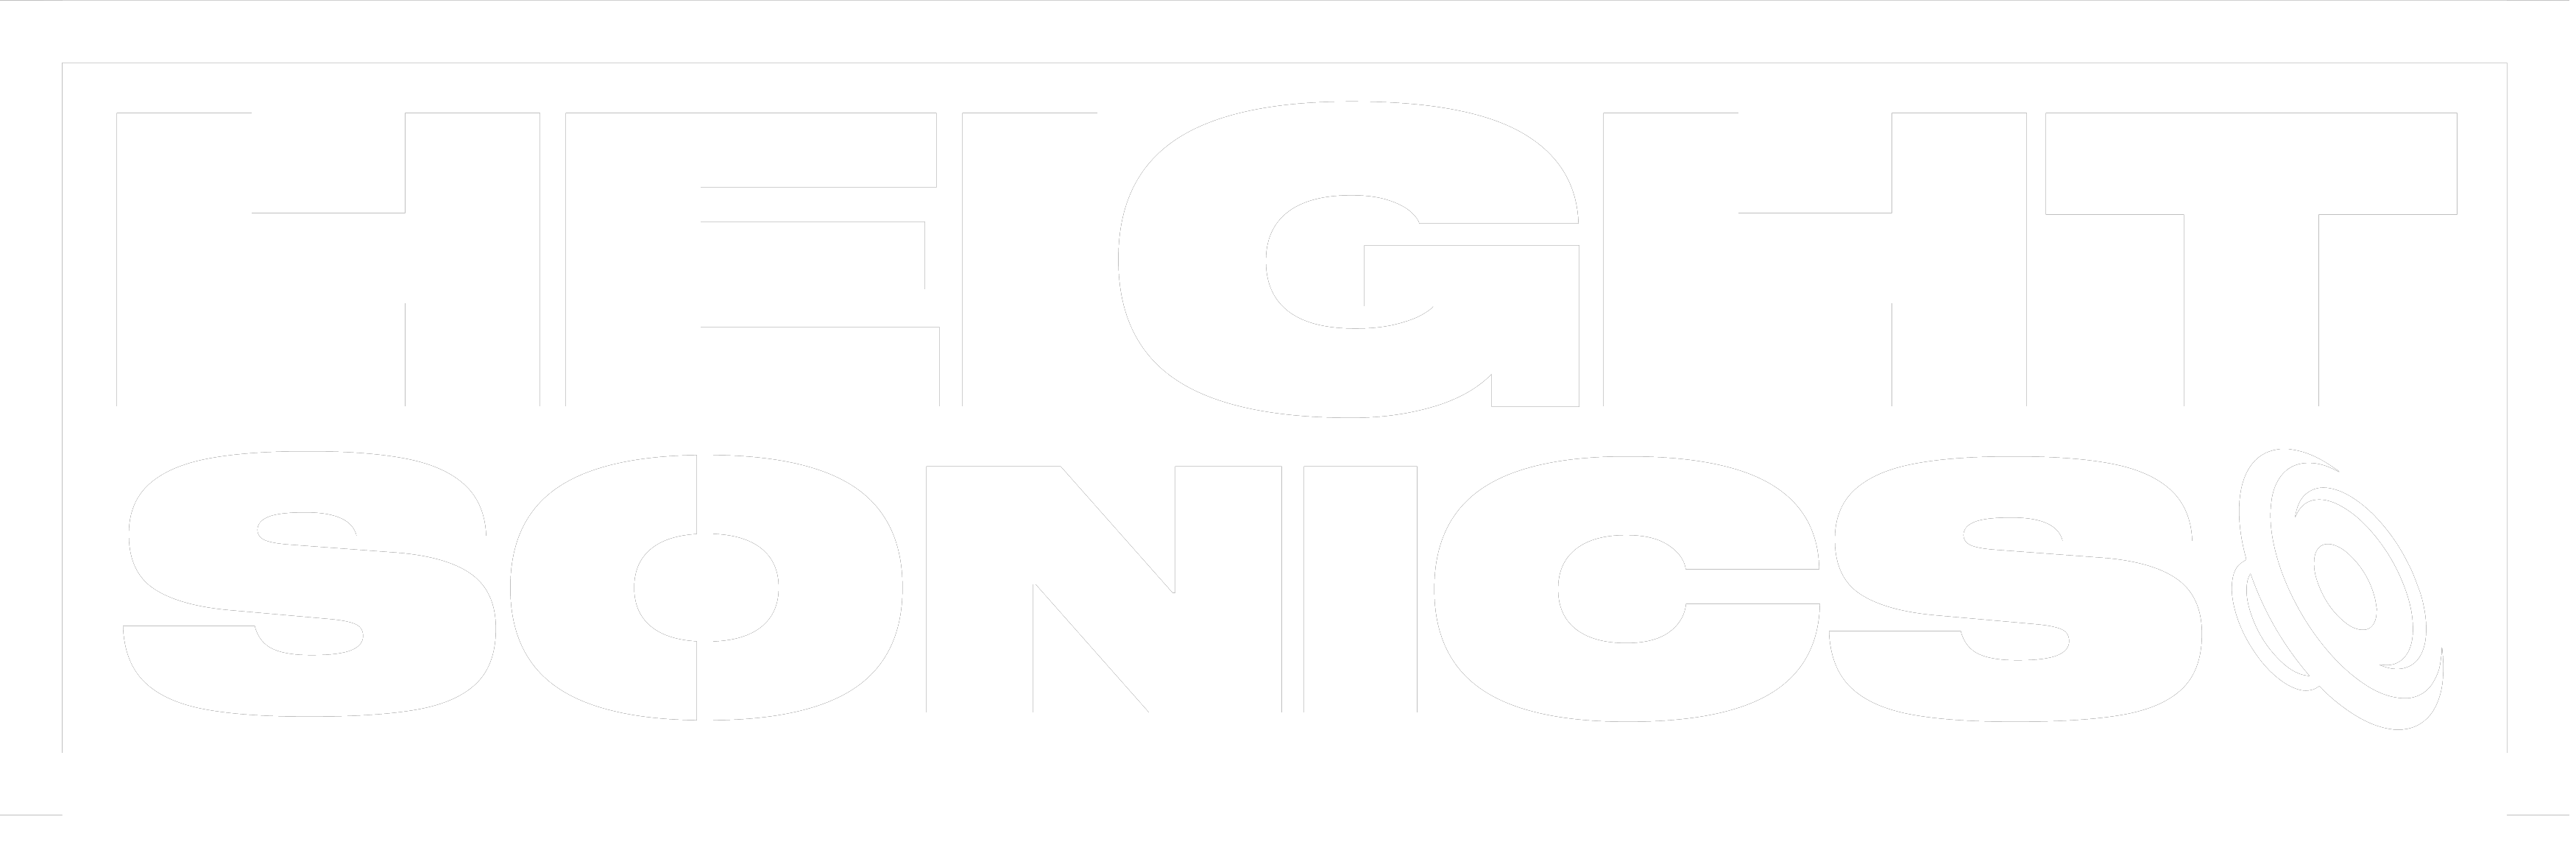 Height Mastering logo